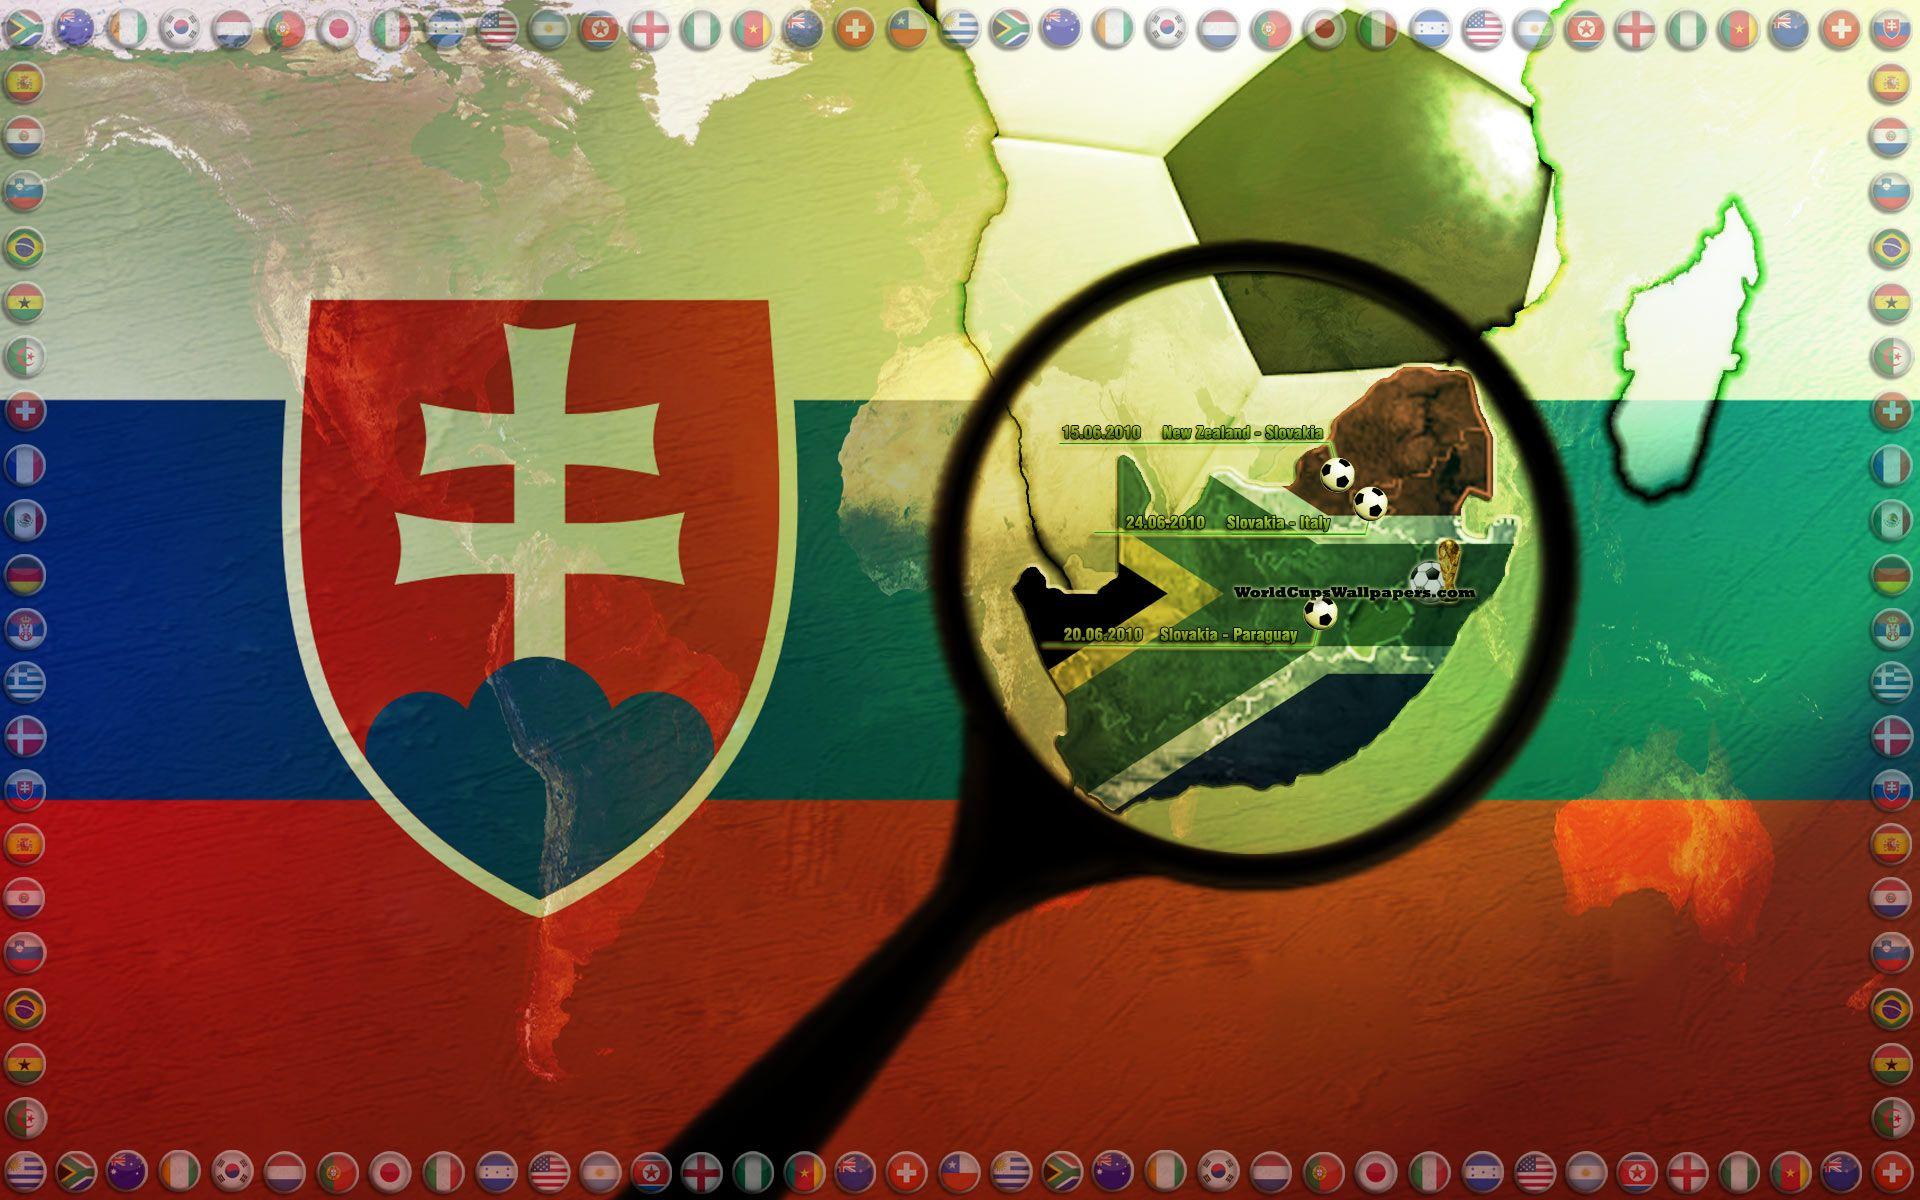 Slovakia FIFA World Cup 2010 wallpaper and image